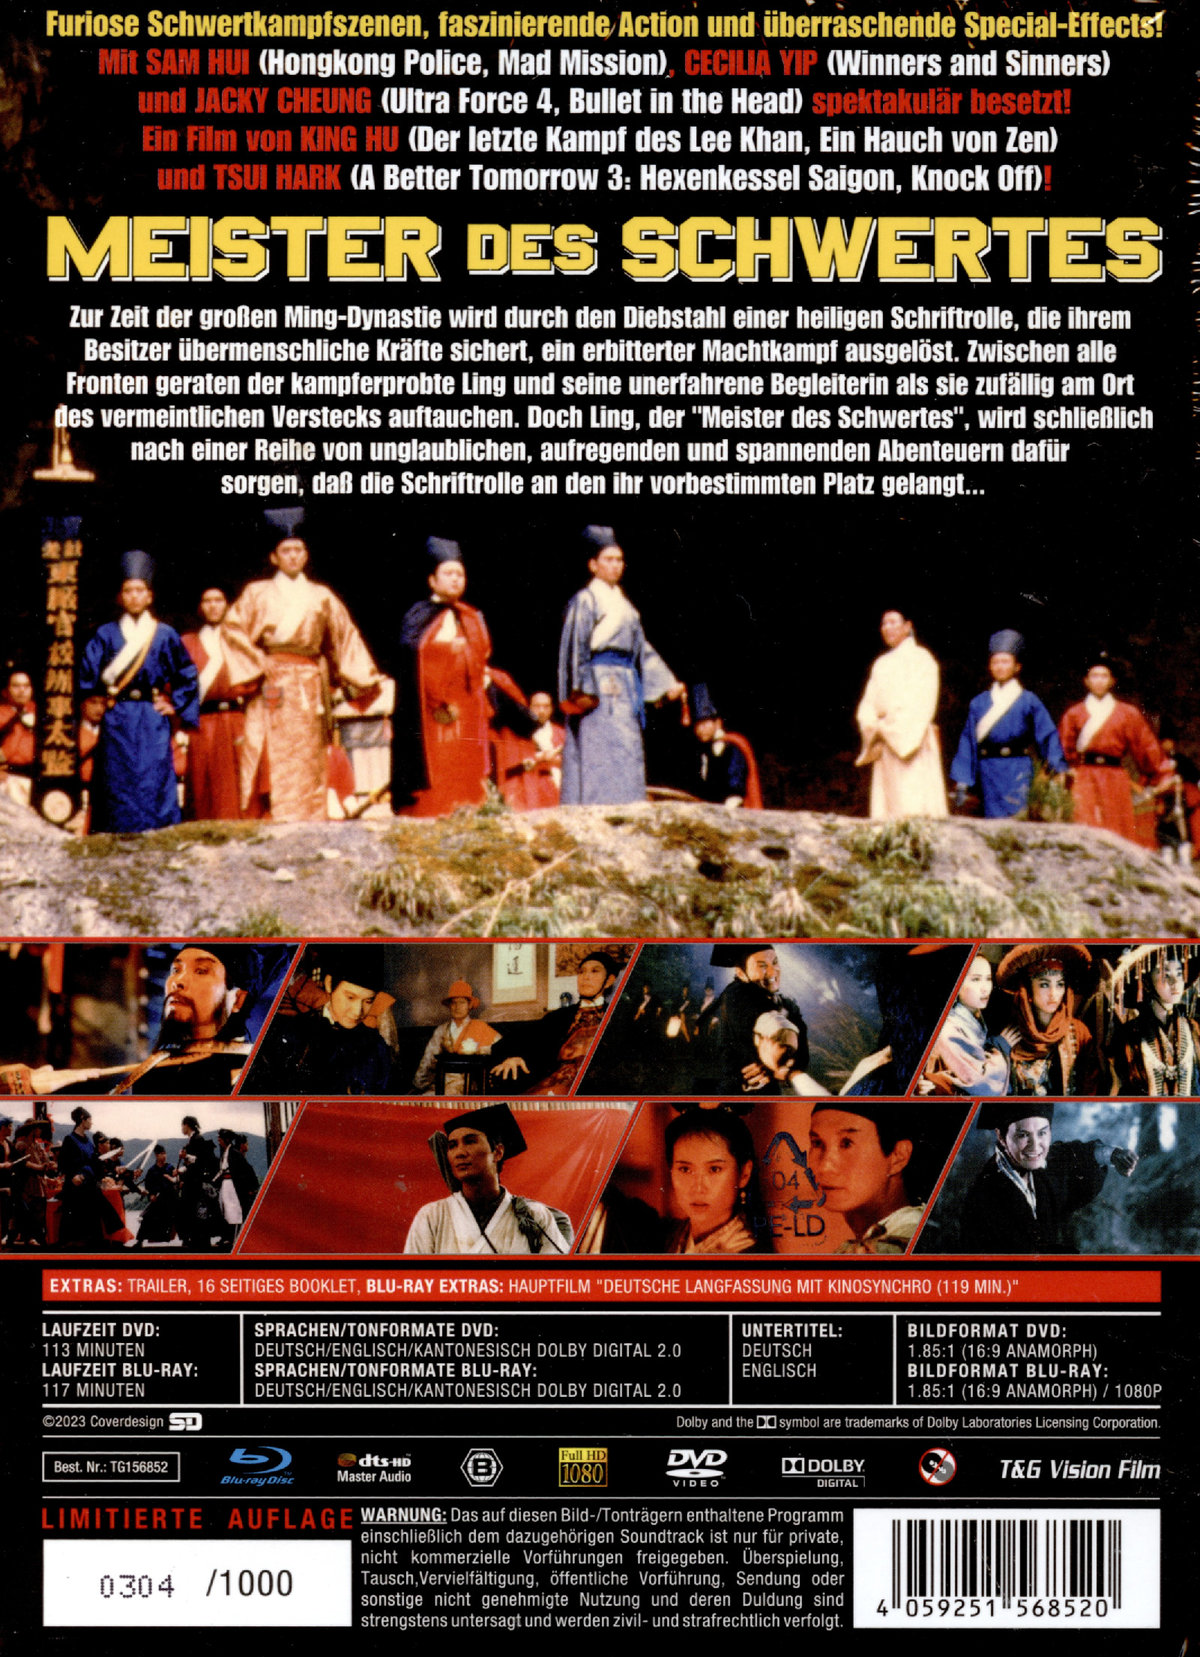 Meister des Schwertes 1 - Uncut Mediabook Edition (DVD+blu-ray) (B)